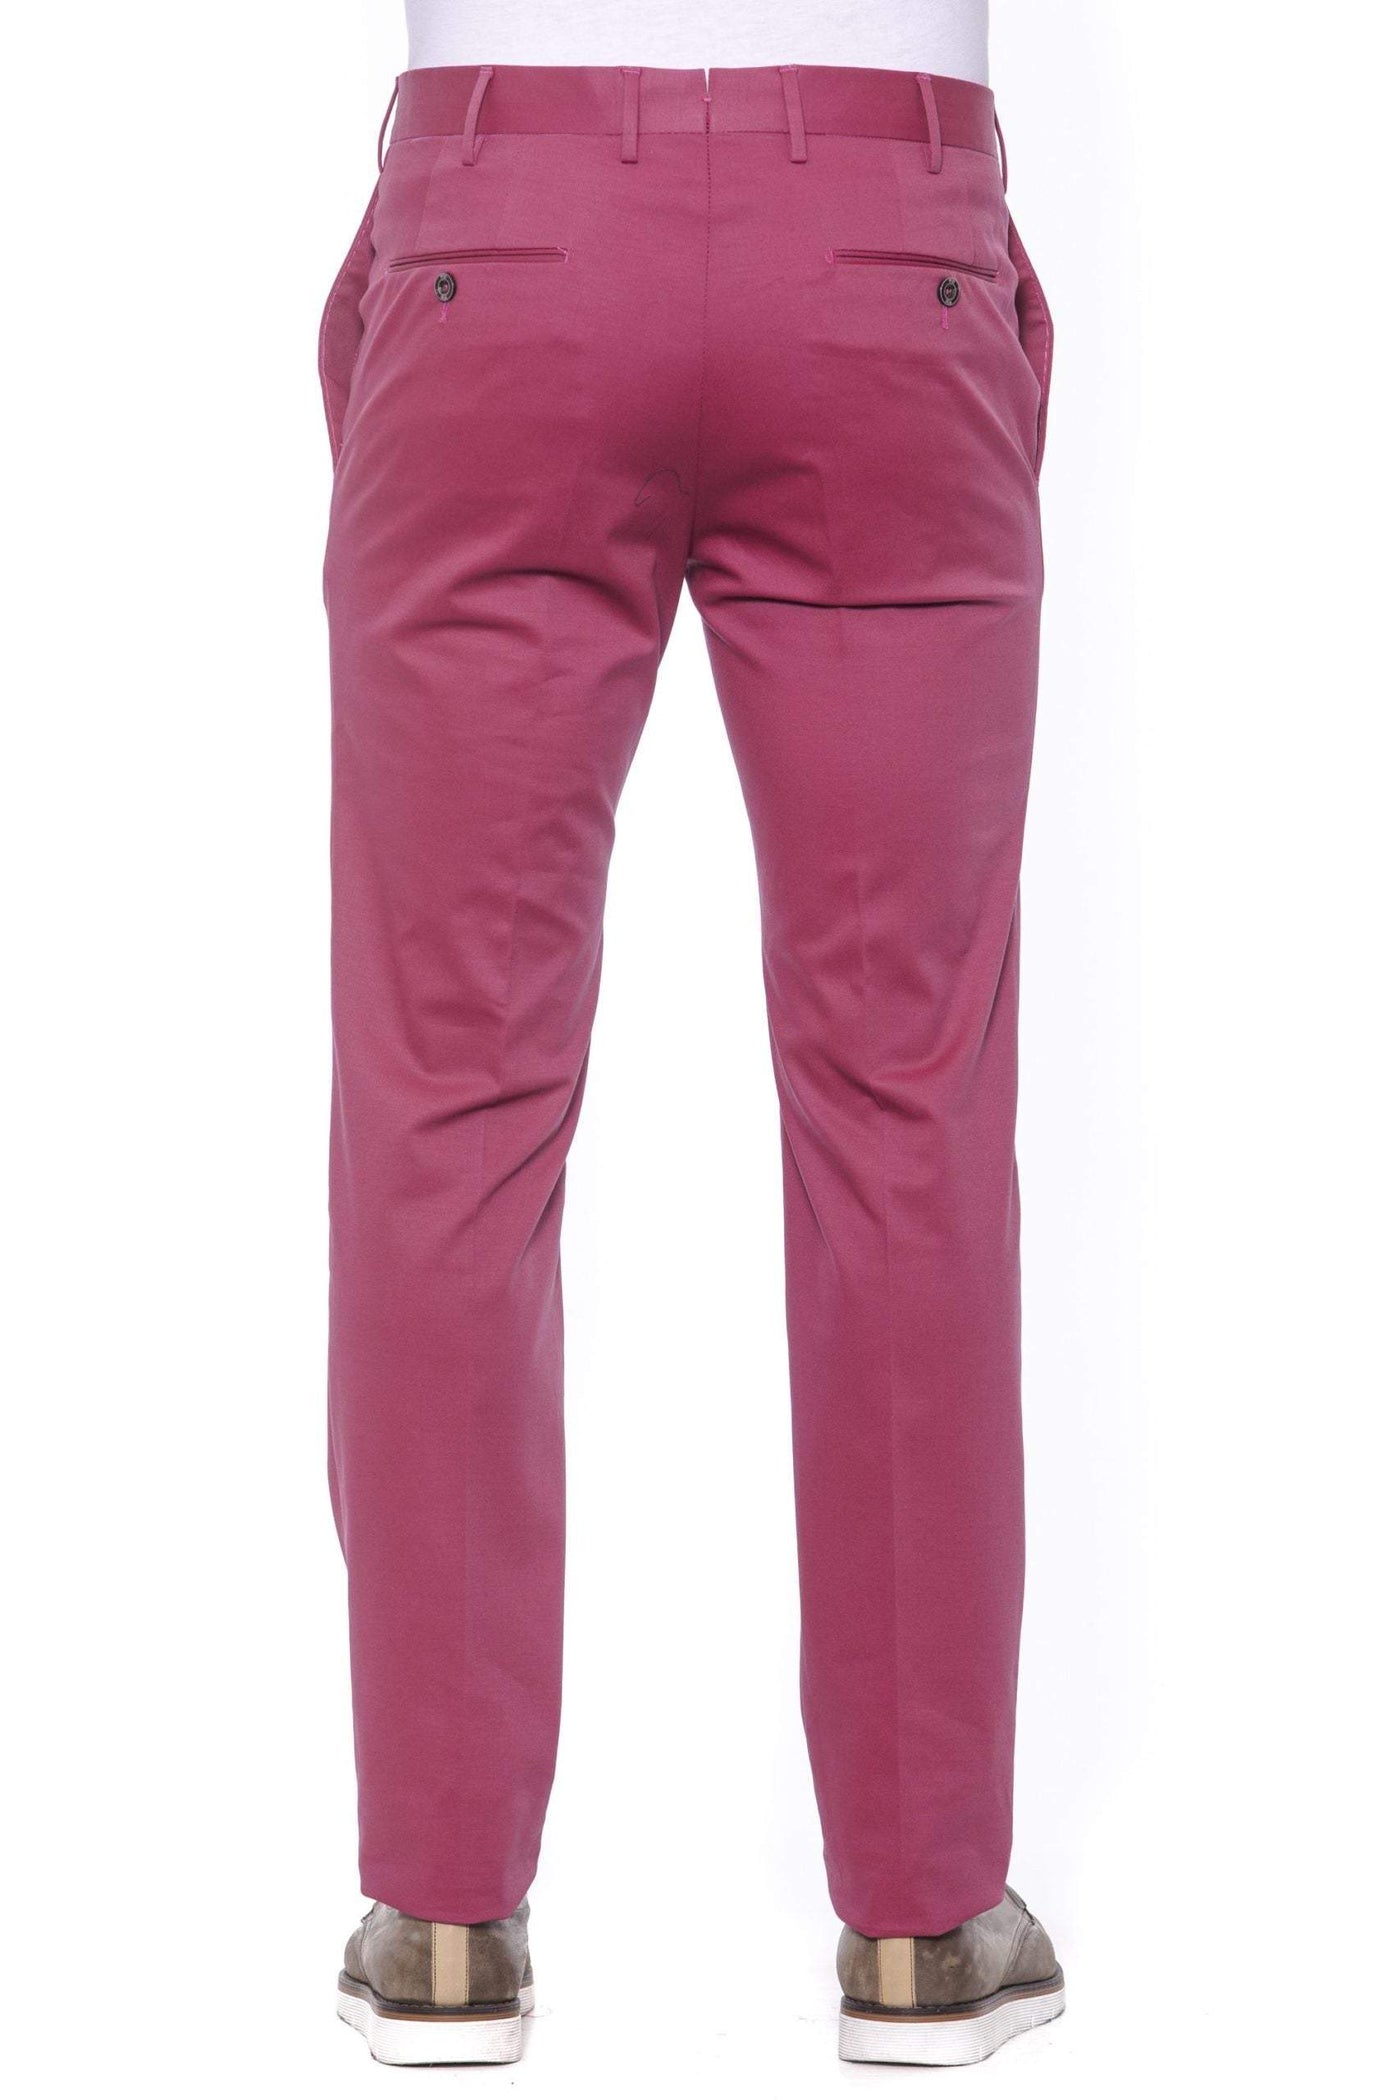 PT Torino Fuchsia Cotton Jeans & Pant #men, feed-1, Fuchsia, IT46 | S, IT48 | M, IT50 | L, IT52 | L, IT54 | XL, Jeans & Pants - Men - Clothing, PT Torino at SEYMAYKA